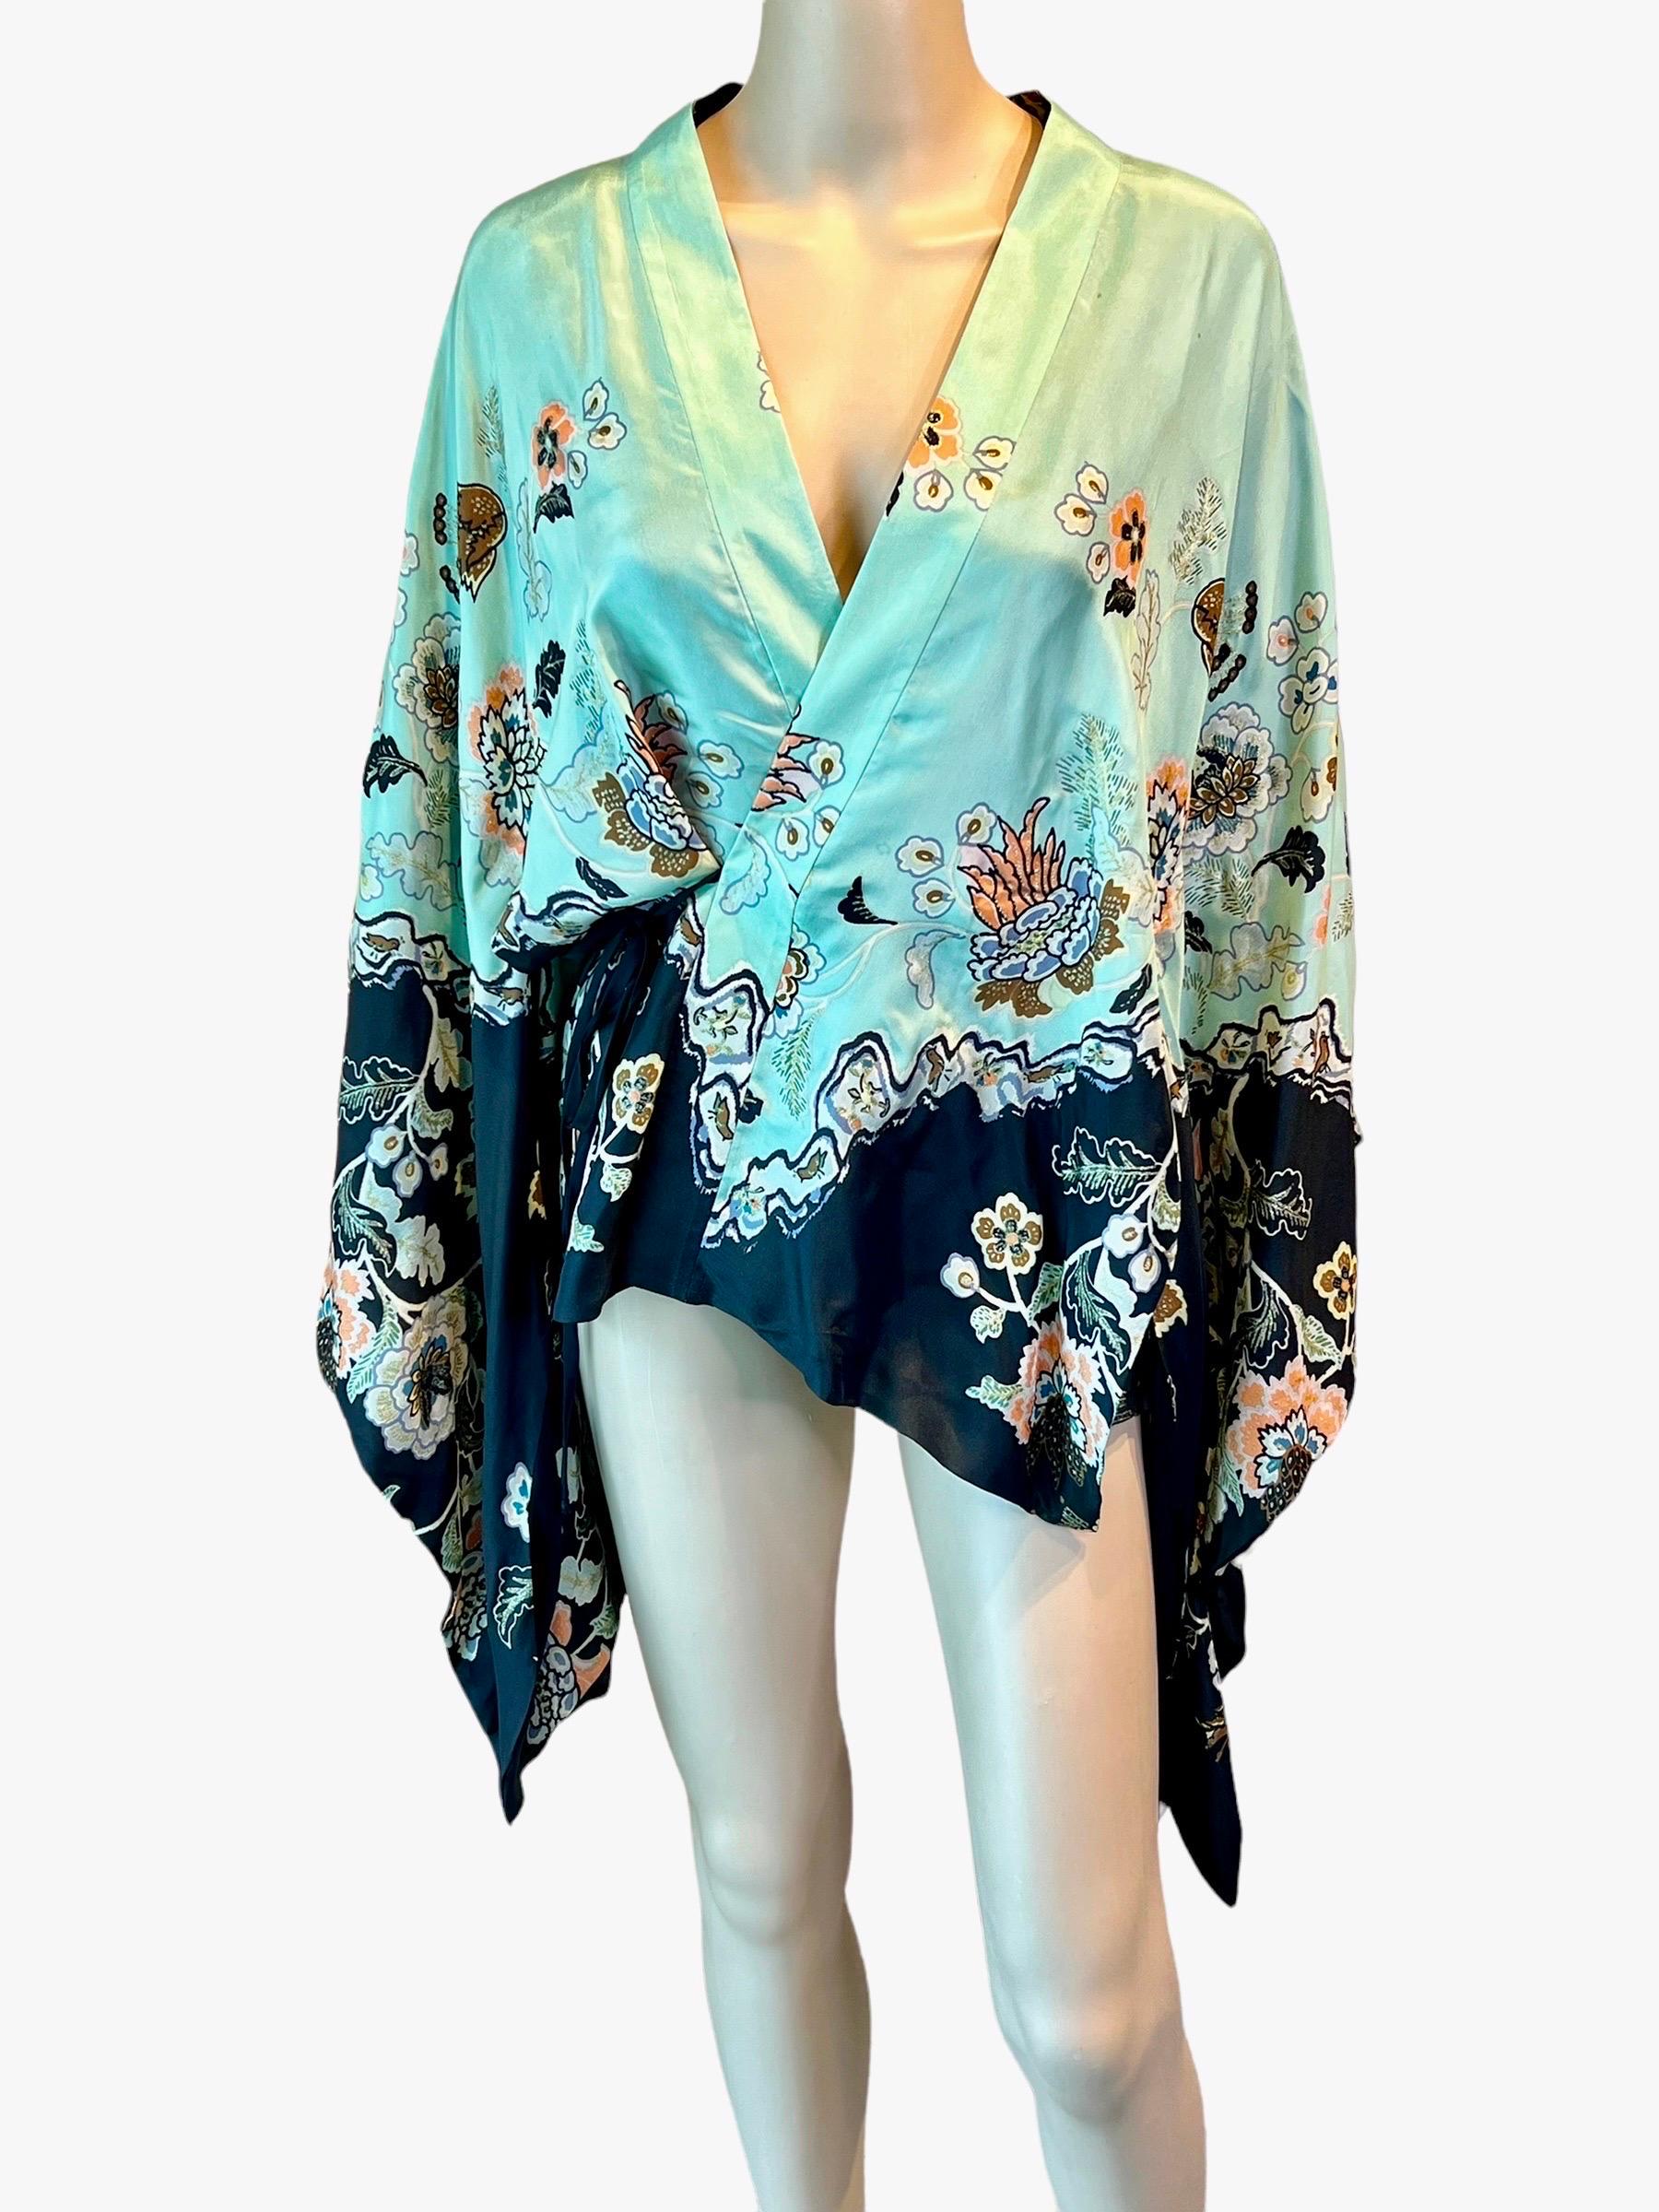 Roberto Cavalli S/S 2003 Runway Chinoiserie Print Silk Kimono Top For Sale 4